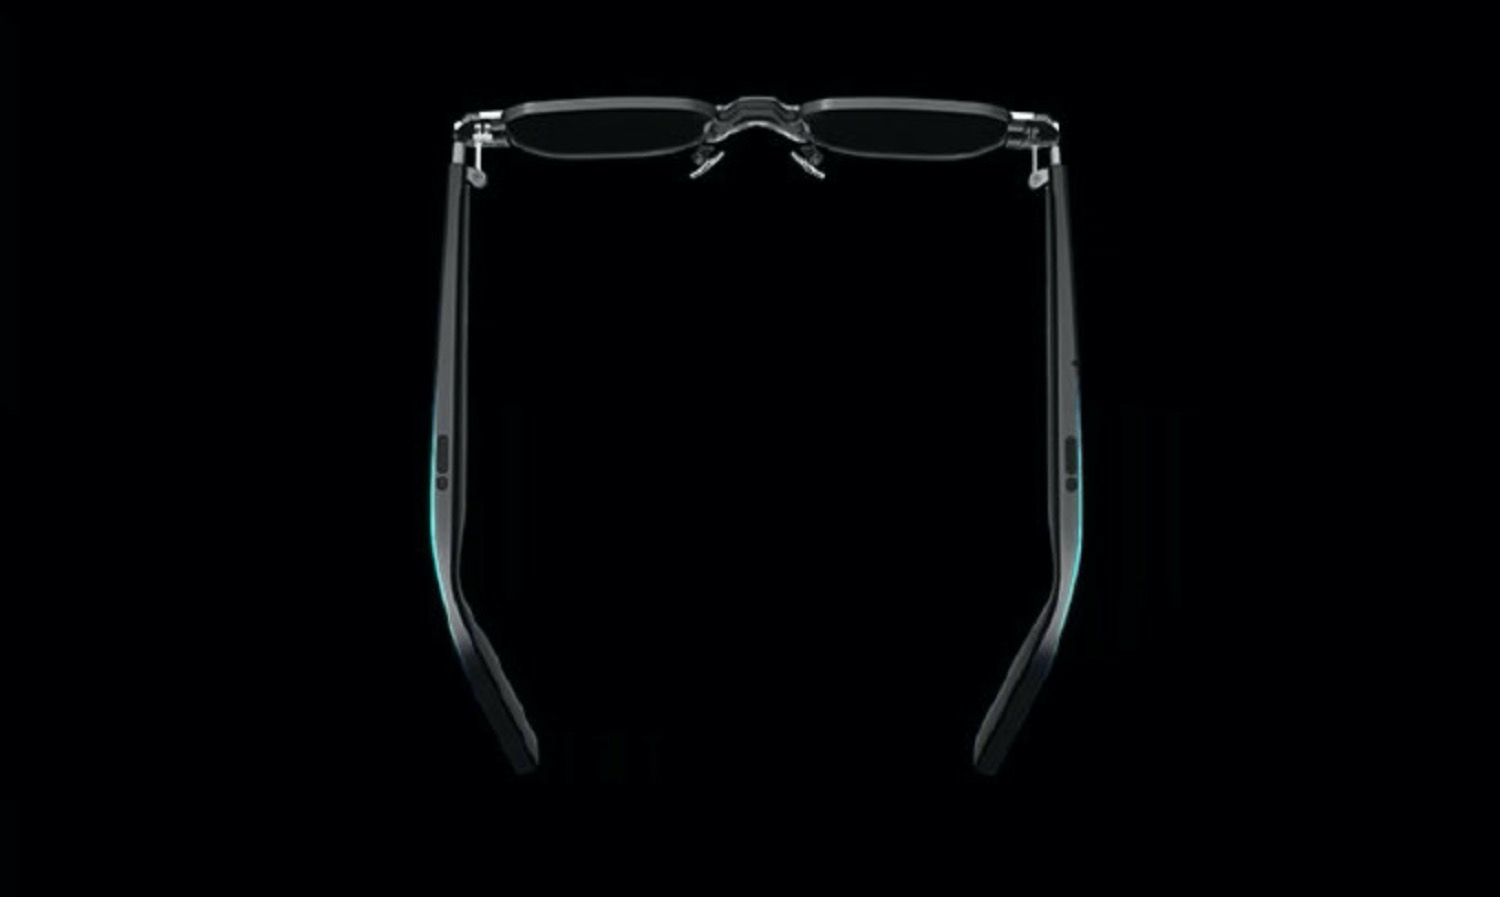 The Huawei x Gentle Monster Eyewear II makes the future look stylish -  GadgetMatch